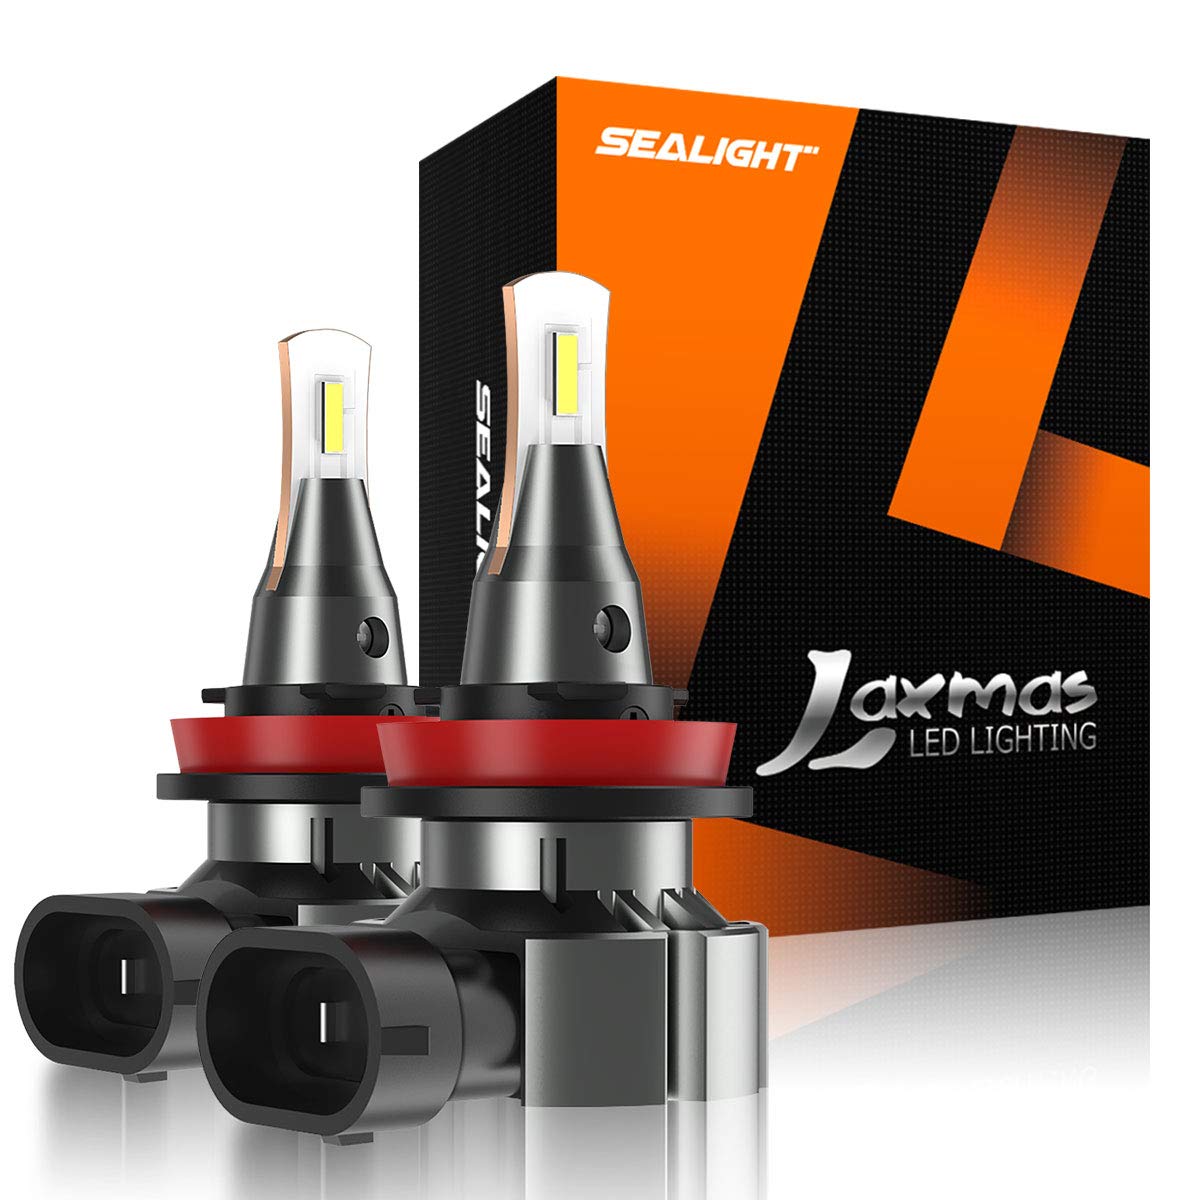 SEALIGHT-L1-Upgraded-Car-LED-Fog-Lights-H7-H11-9005-9006-40W-5600LM-6000K-Xenon-White-Halogen-Bulb-R-1562923